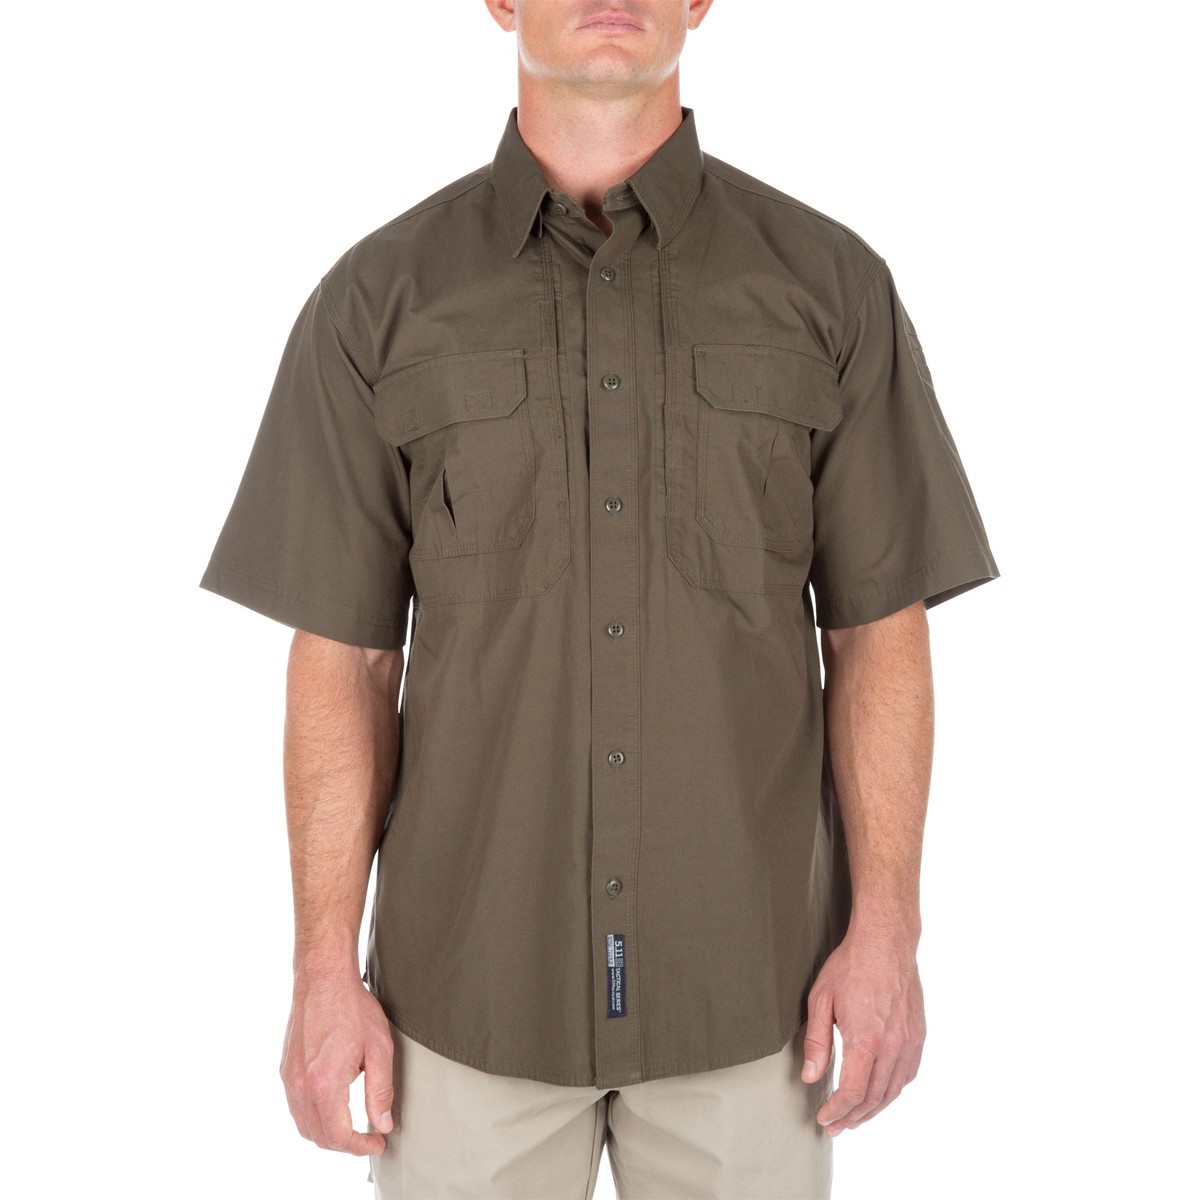 Tactical Uniform for Military, Law Enforcement | Buy 5.11 TACTICAL ...